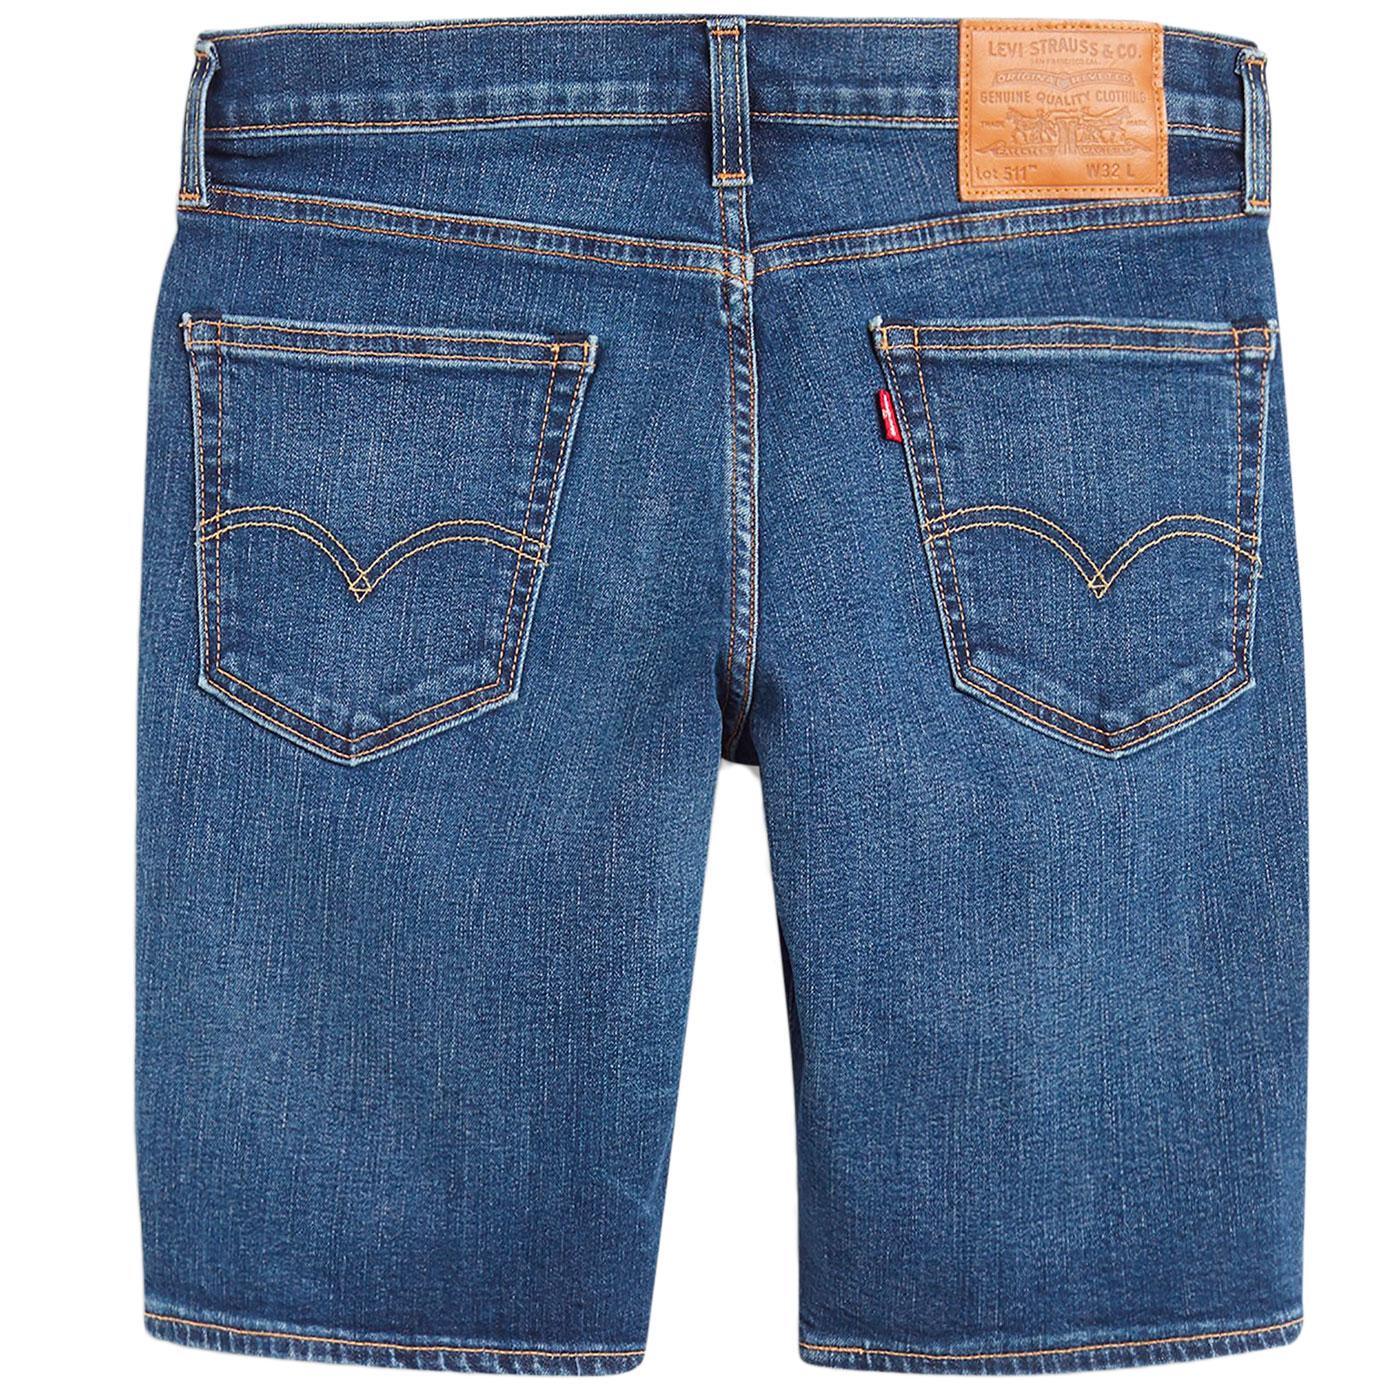 levi's 511 khaki jeans